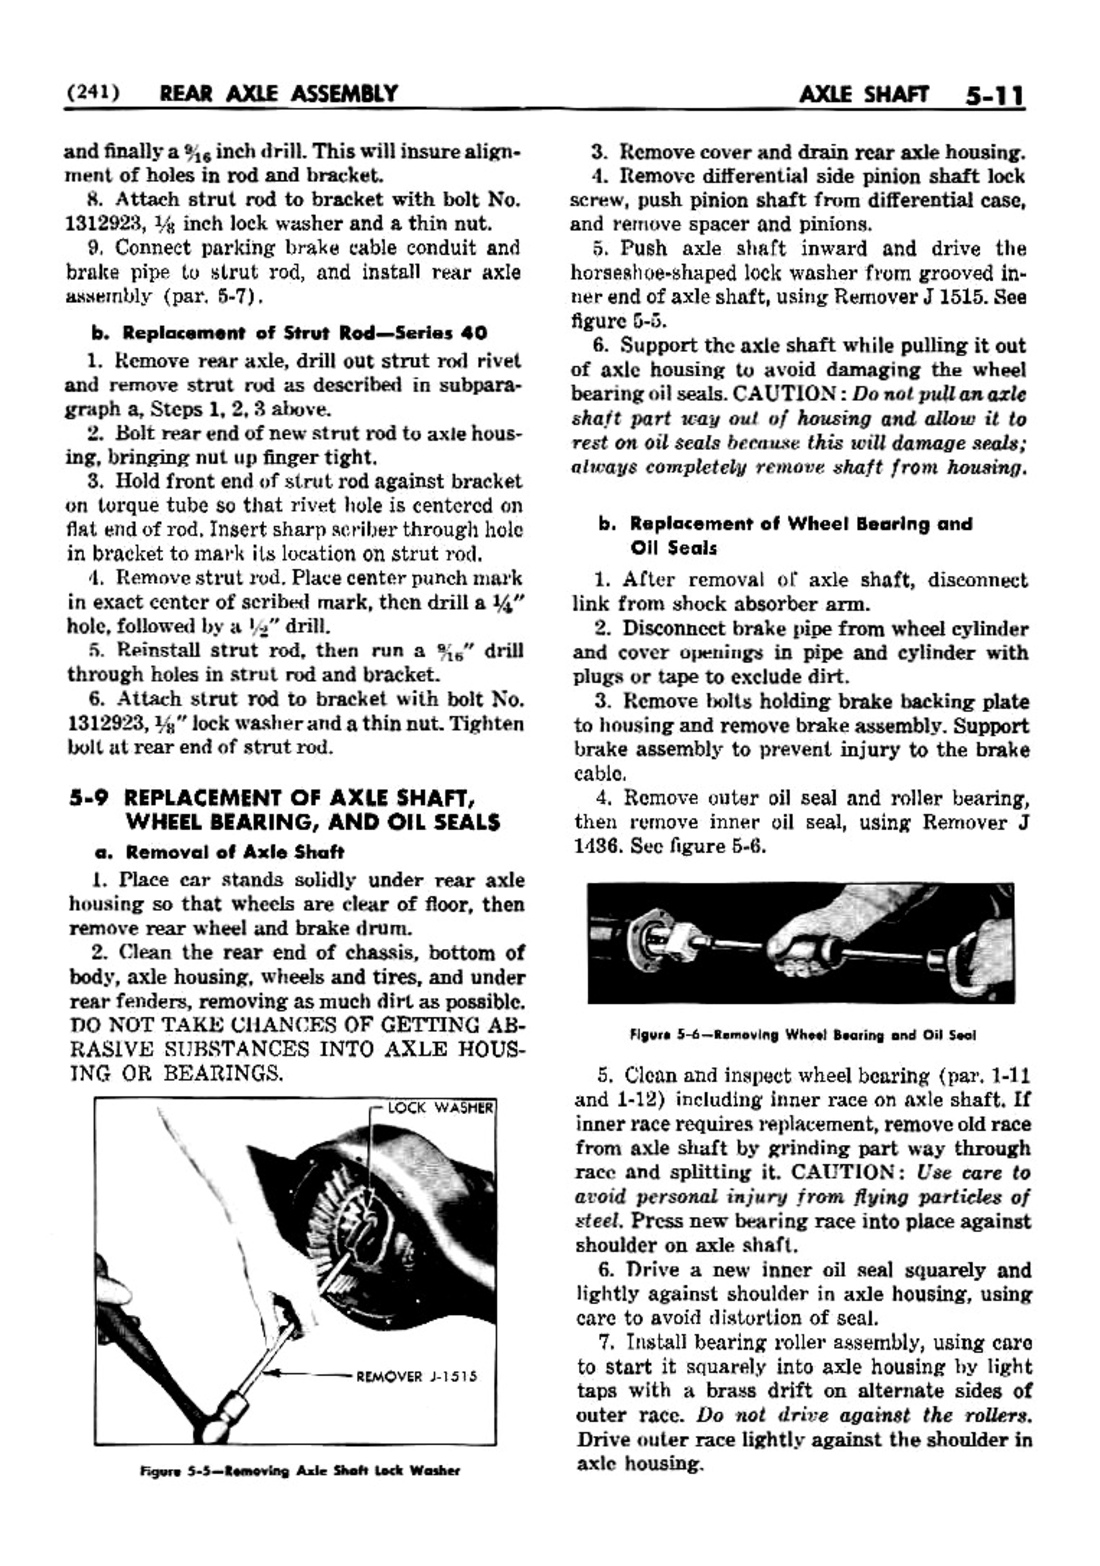 n_06 1952 Buick Shop Manual - Rear Axle-011-011.jpg